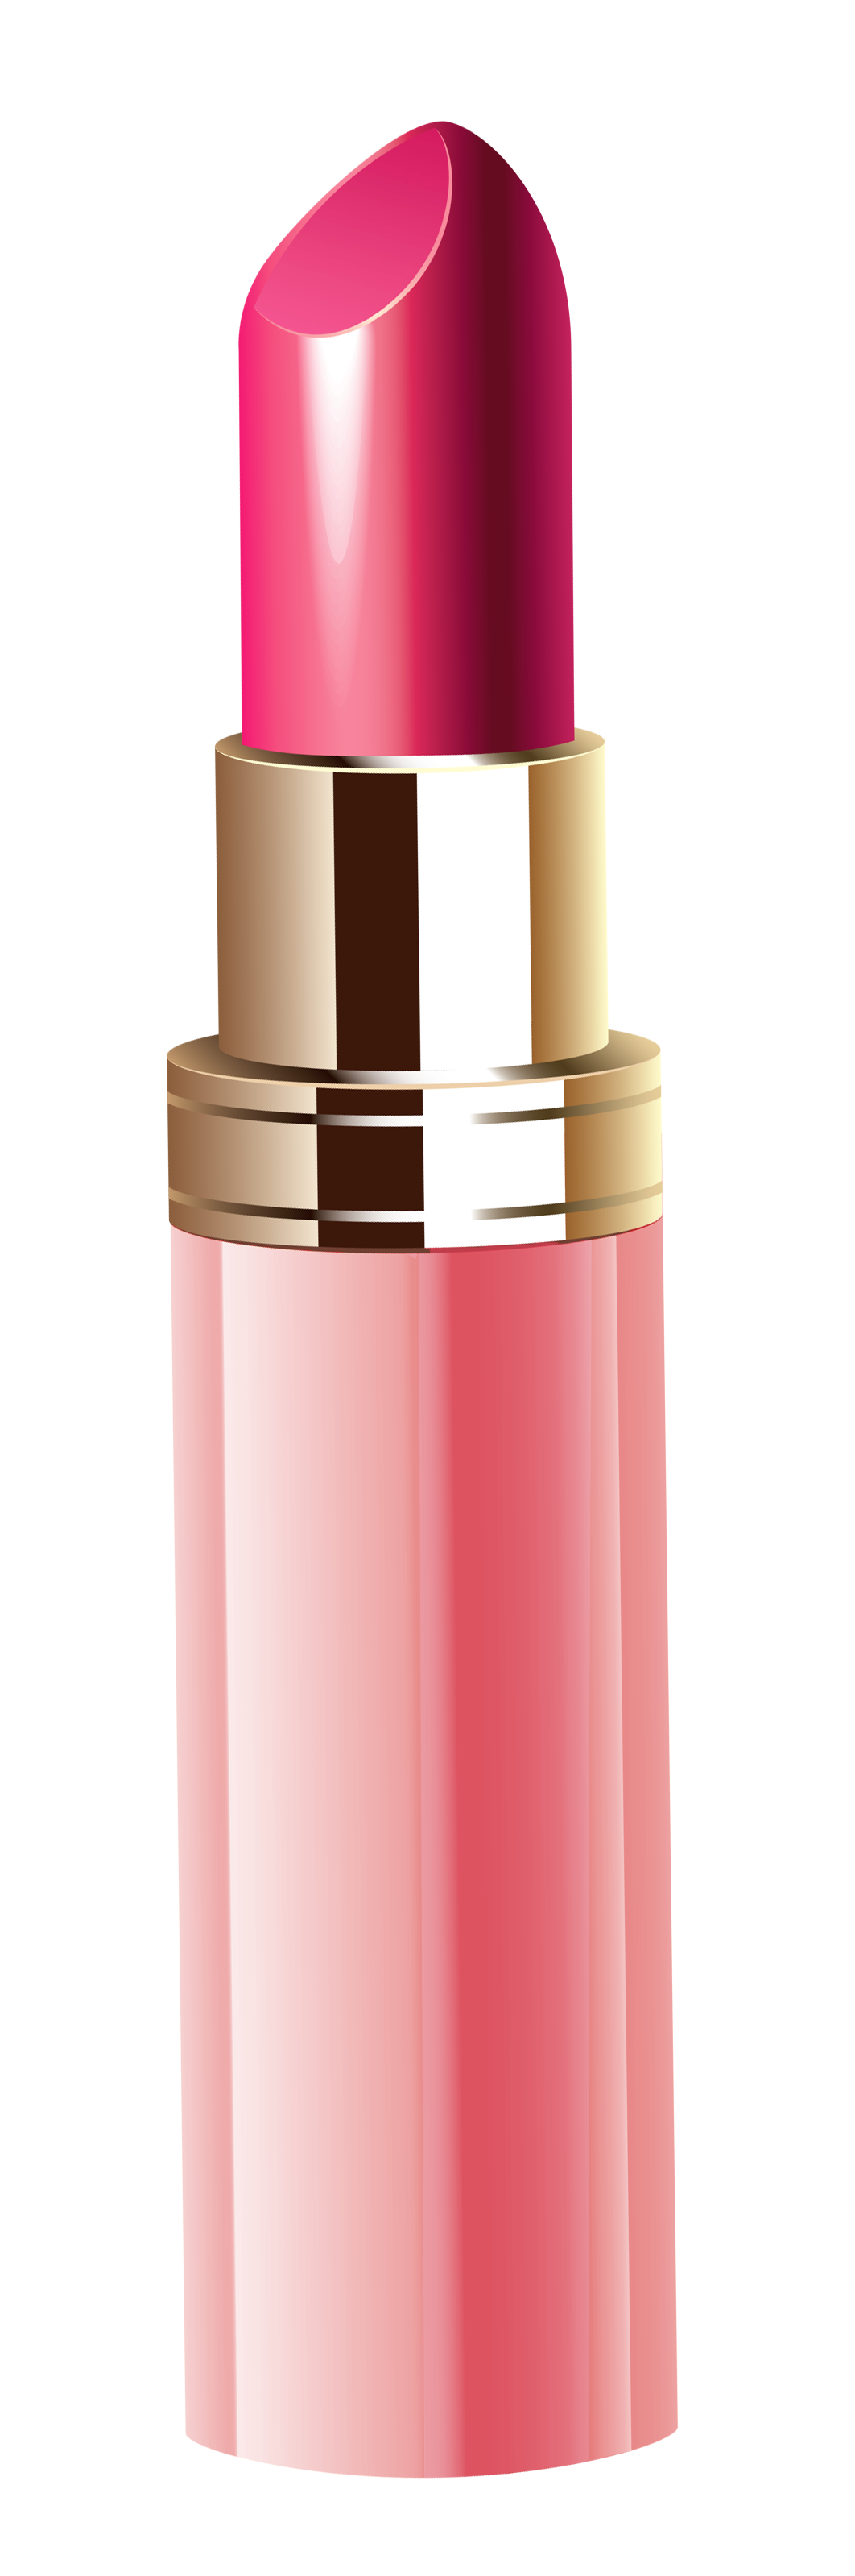 Lipstick PNG Transparent Image